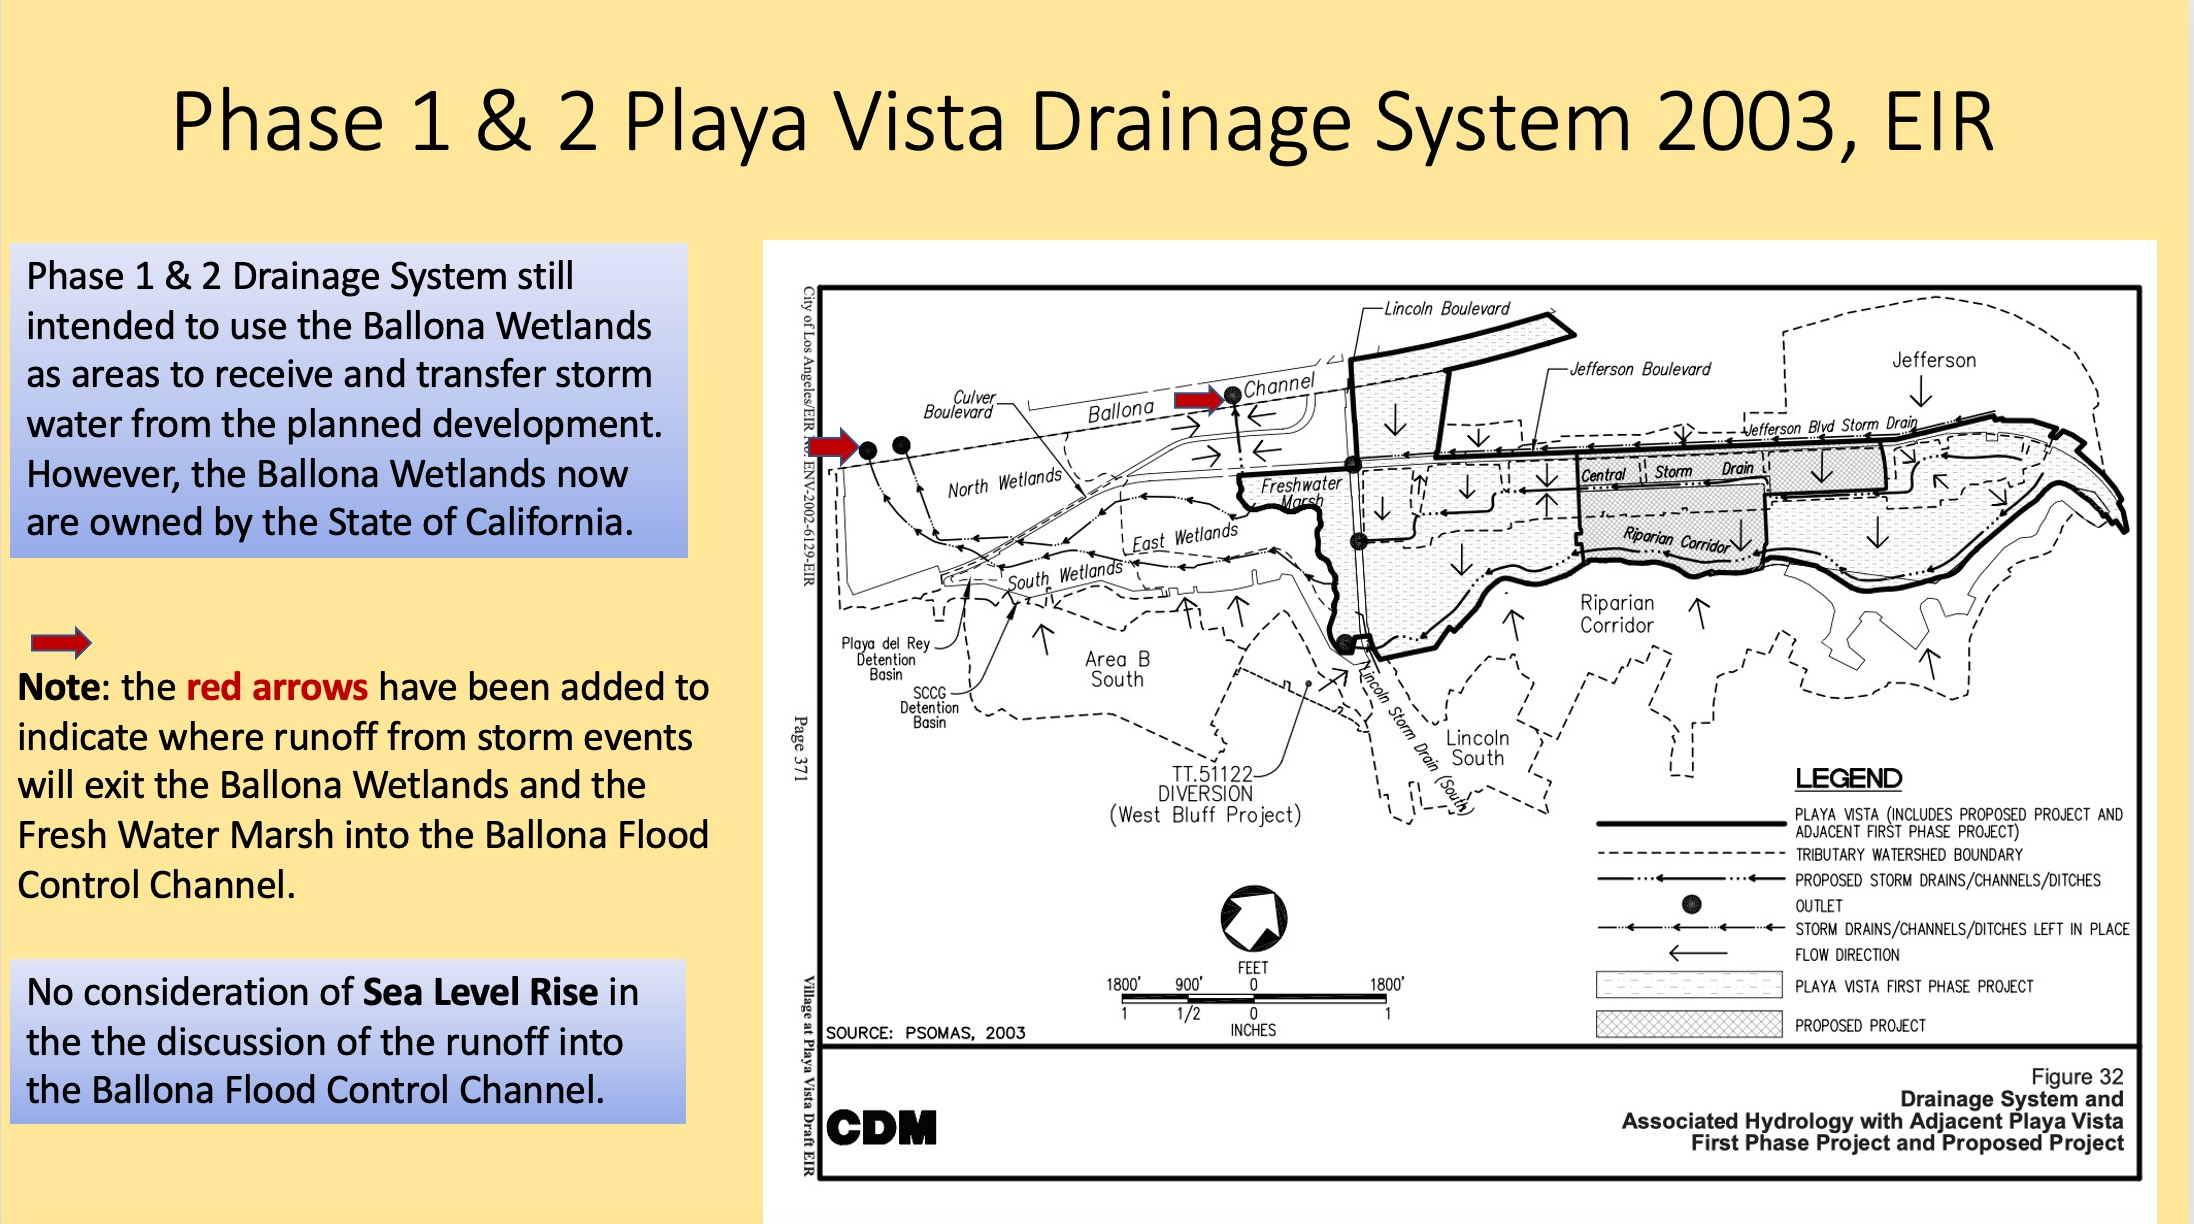 Playa_Vista_Drainage_System_2003_Ignores_Sea_Level_Rise